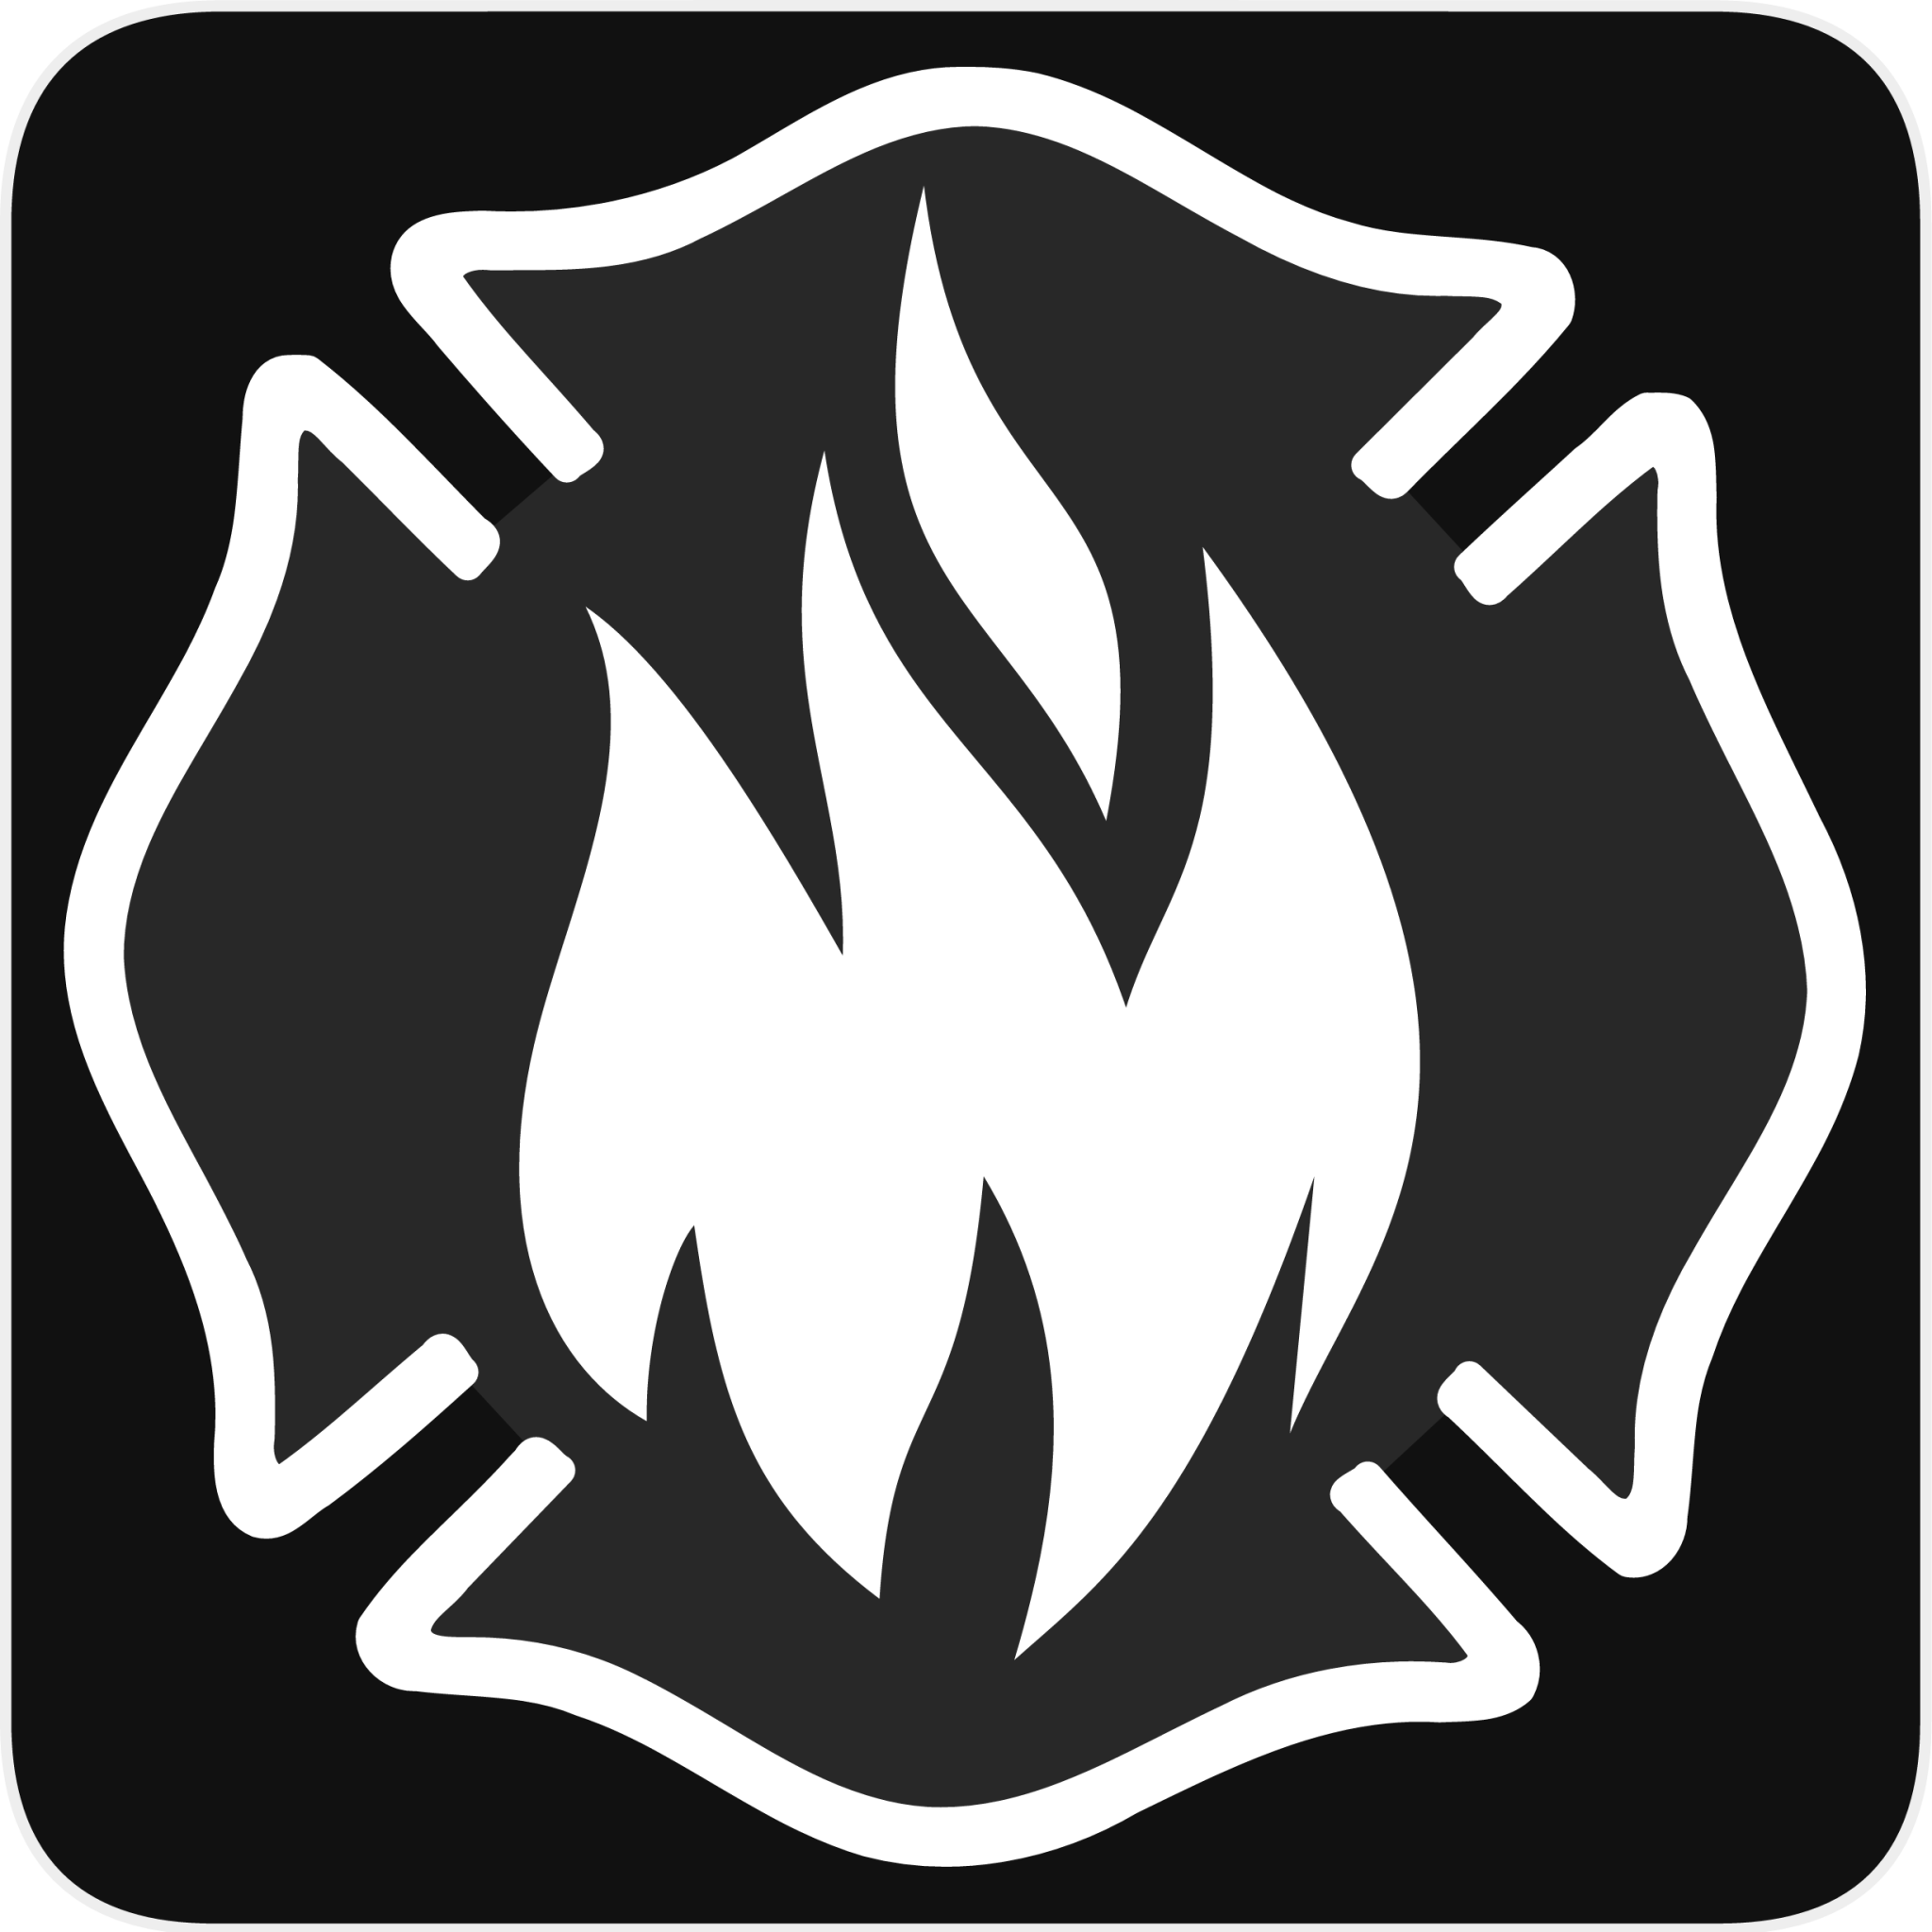 firestation3 icon